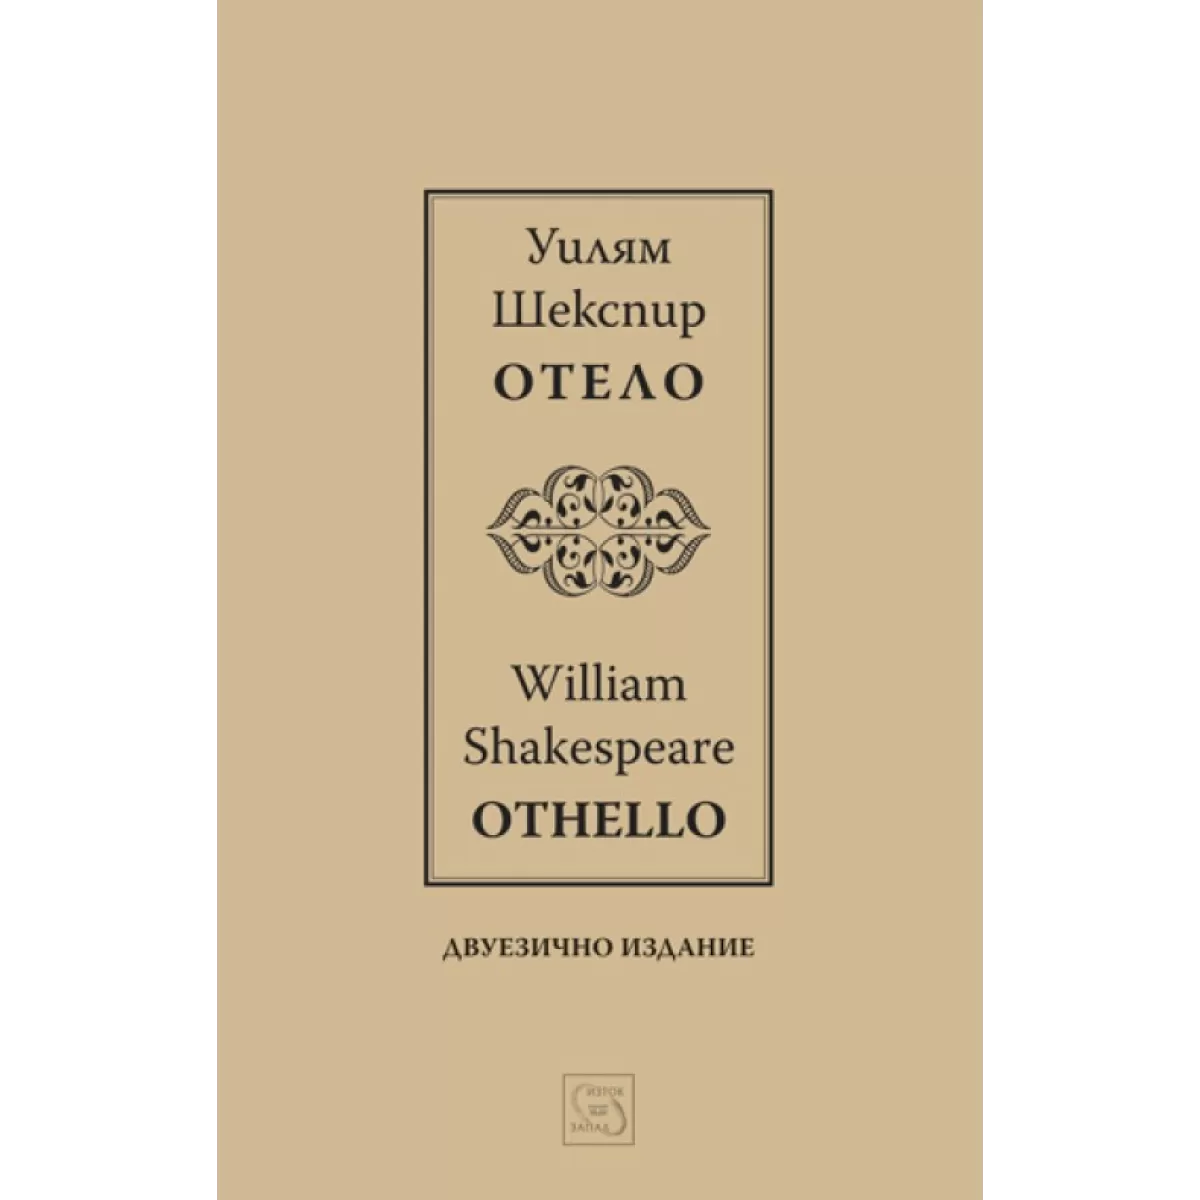 Отело І Othello І Двуезично издание